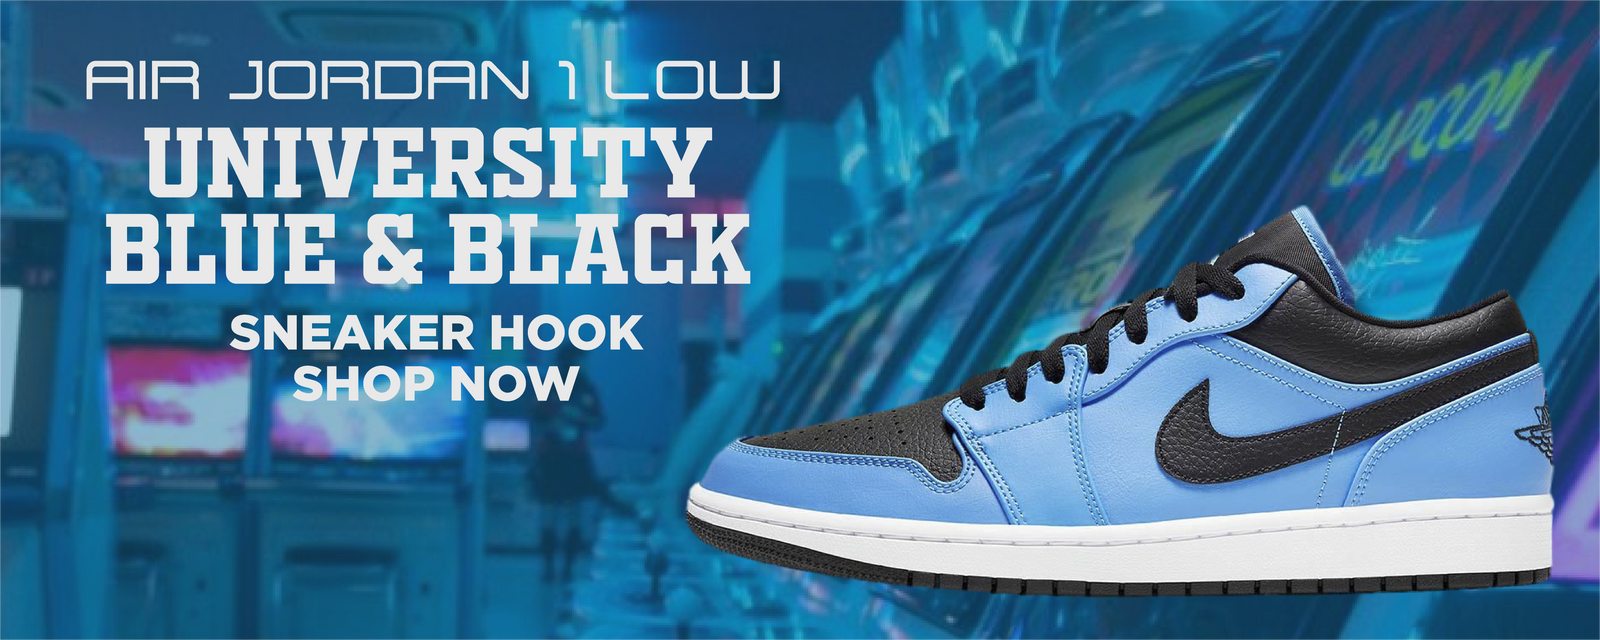 Air Jordan 1 Low University Blue Black Clothing To Match Sneakers Cap Swag